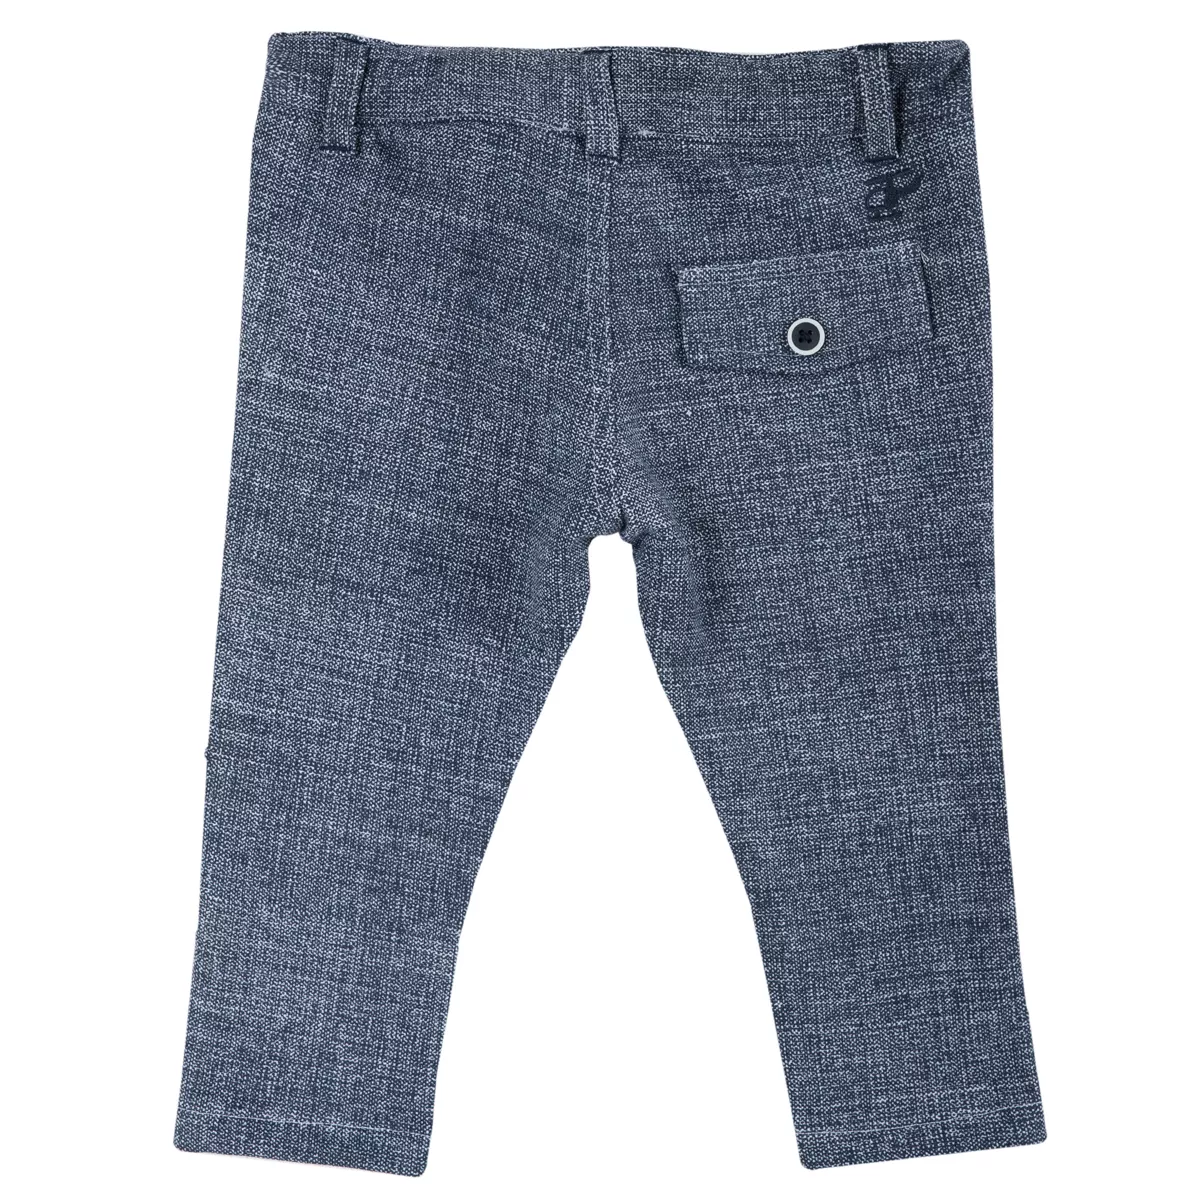 Pantalon lung copii Chicco, bleumarin cu model, 98